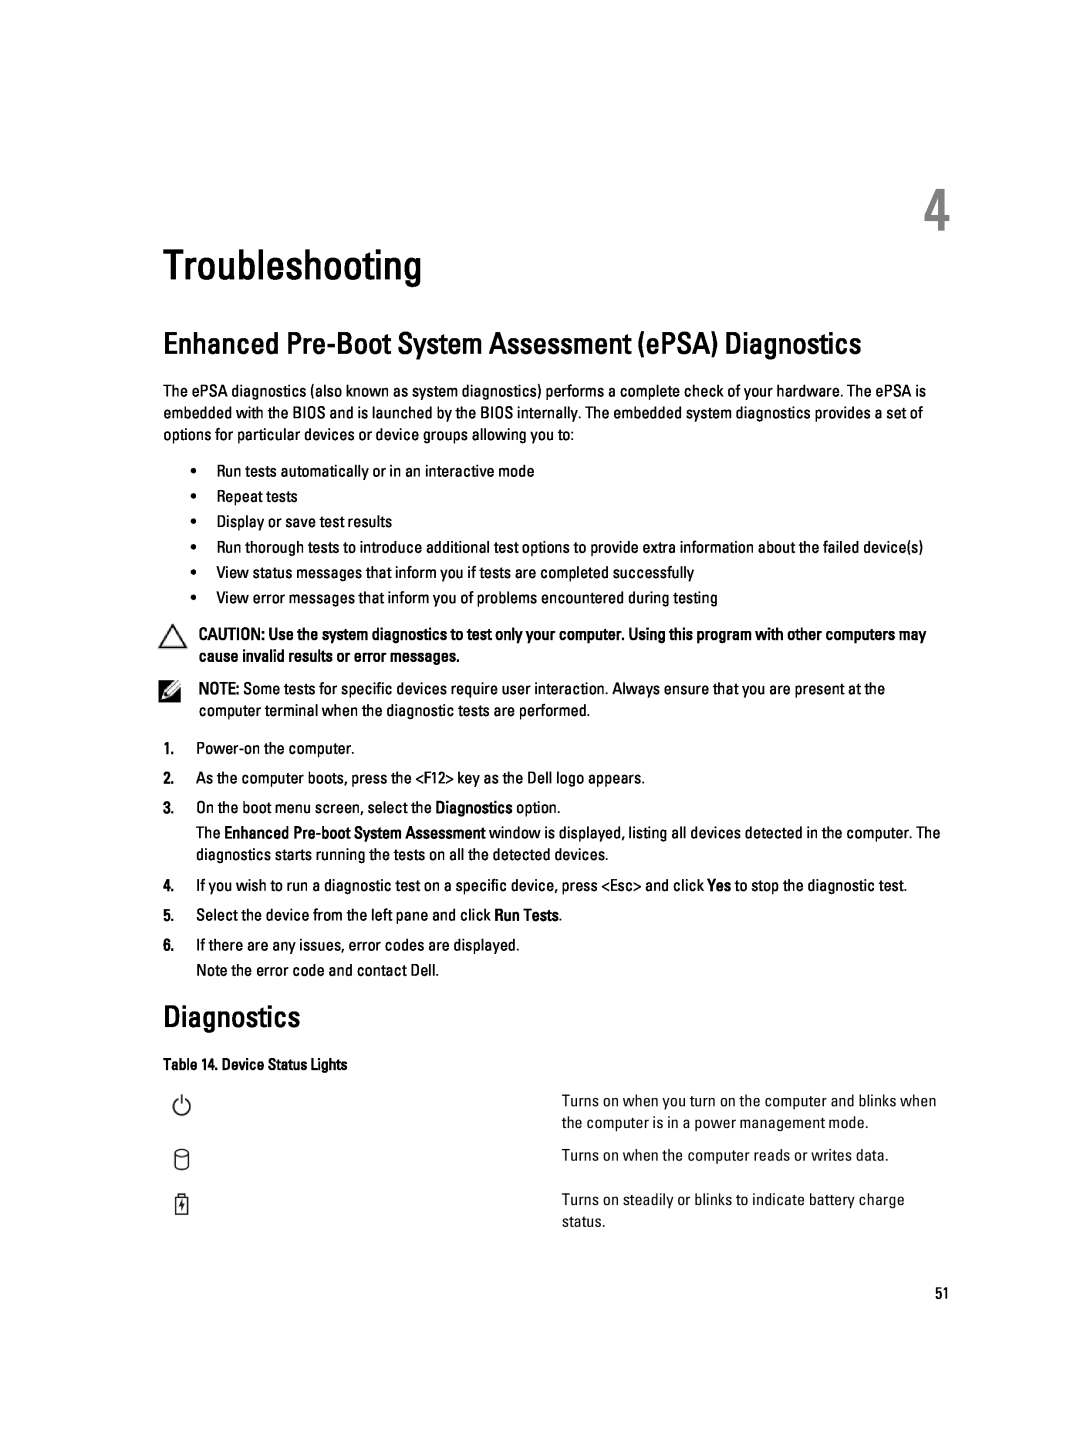 Dell 6430U owner manual Troubleshooting, Enhanced Pre-Boot System Assessment ePSA Diagnostics 